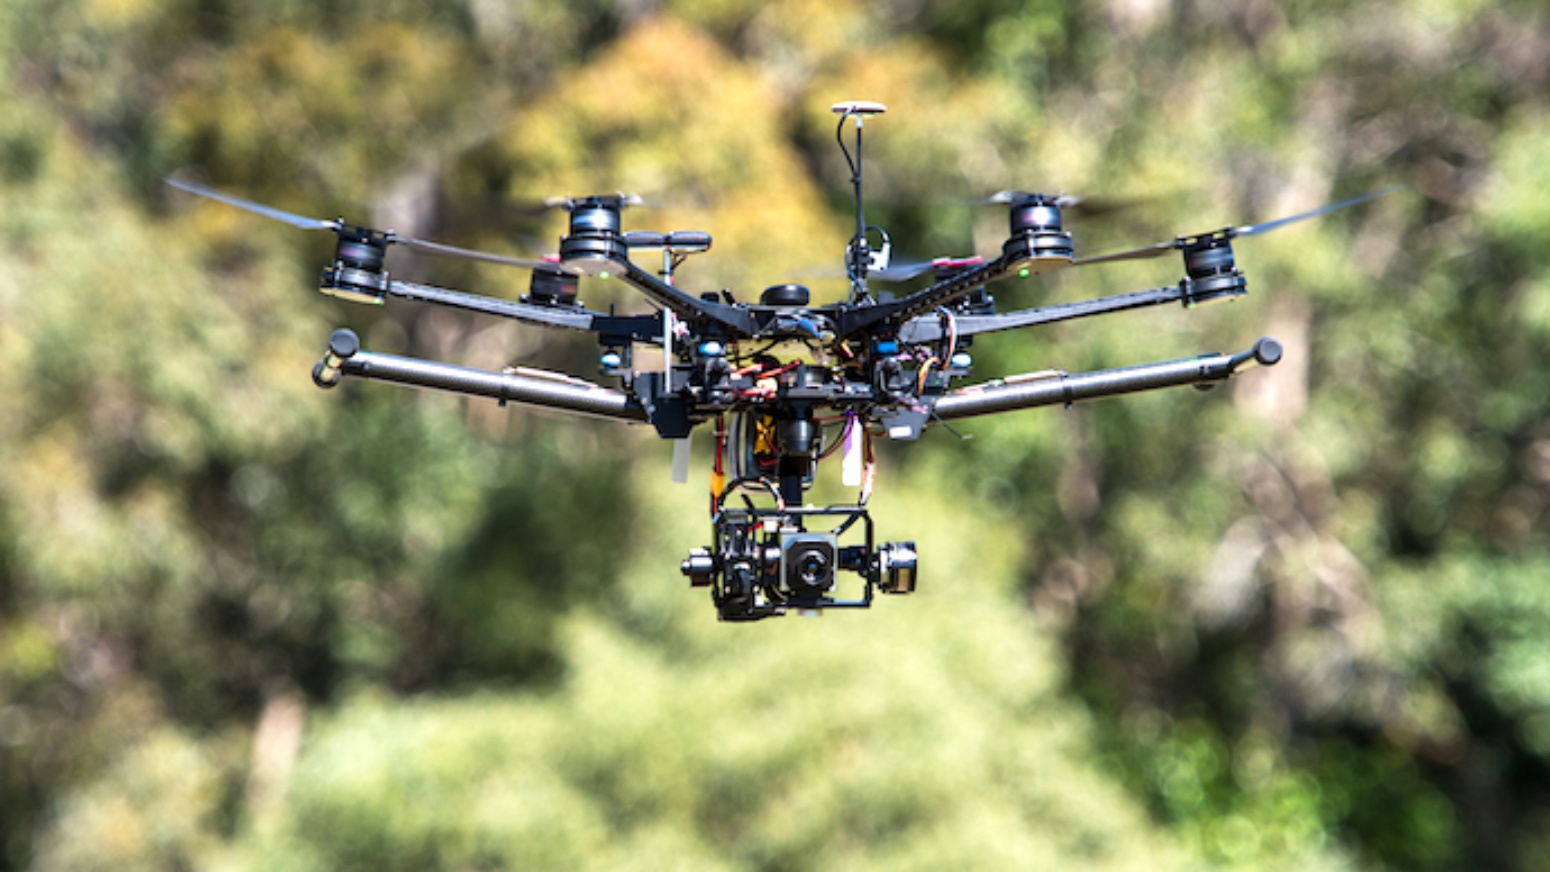 Koala-spotting drones outperform human experts